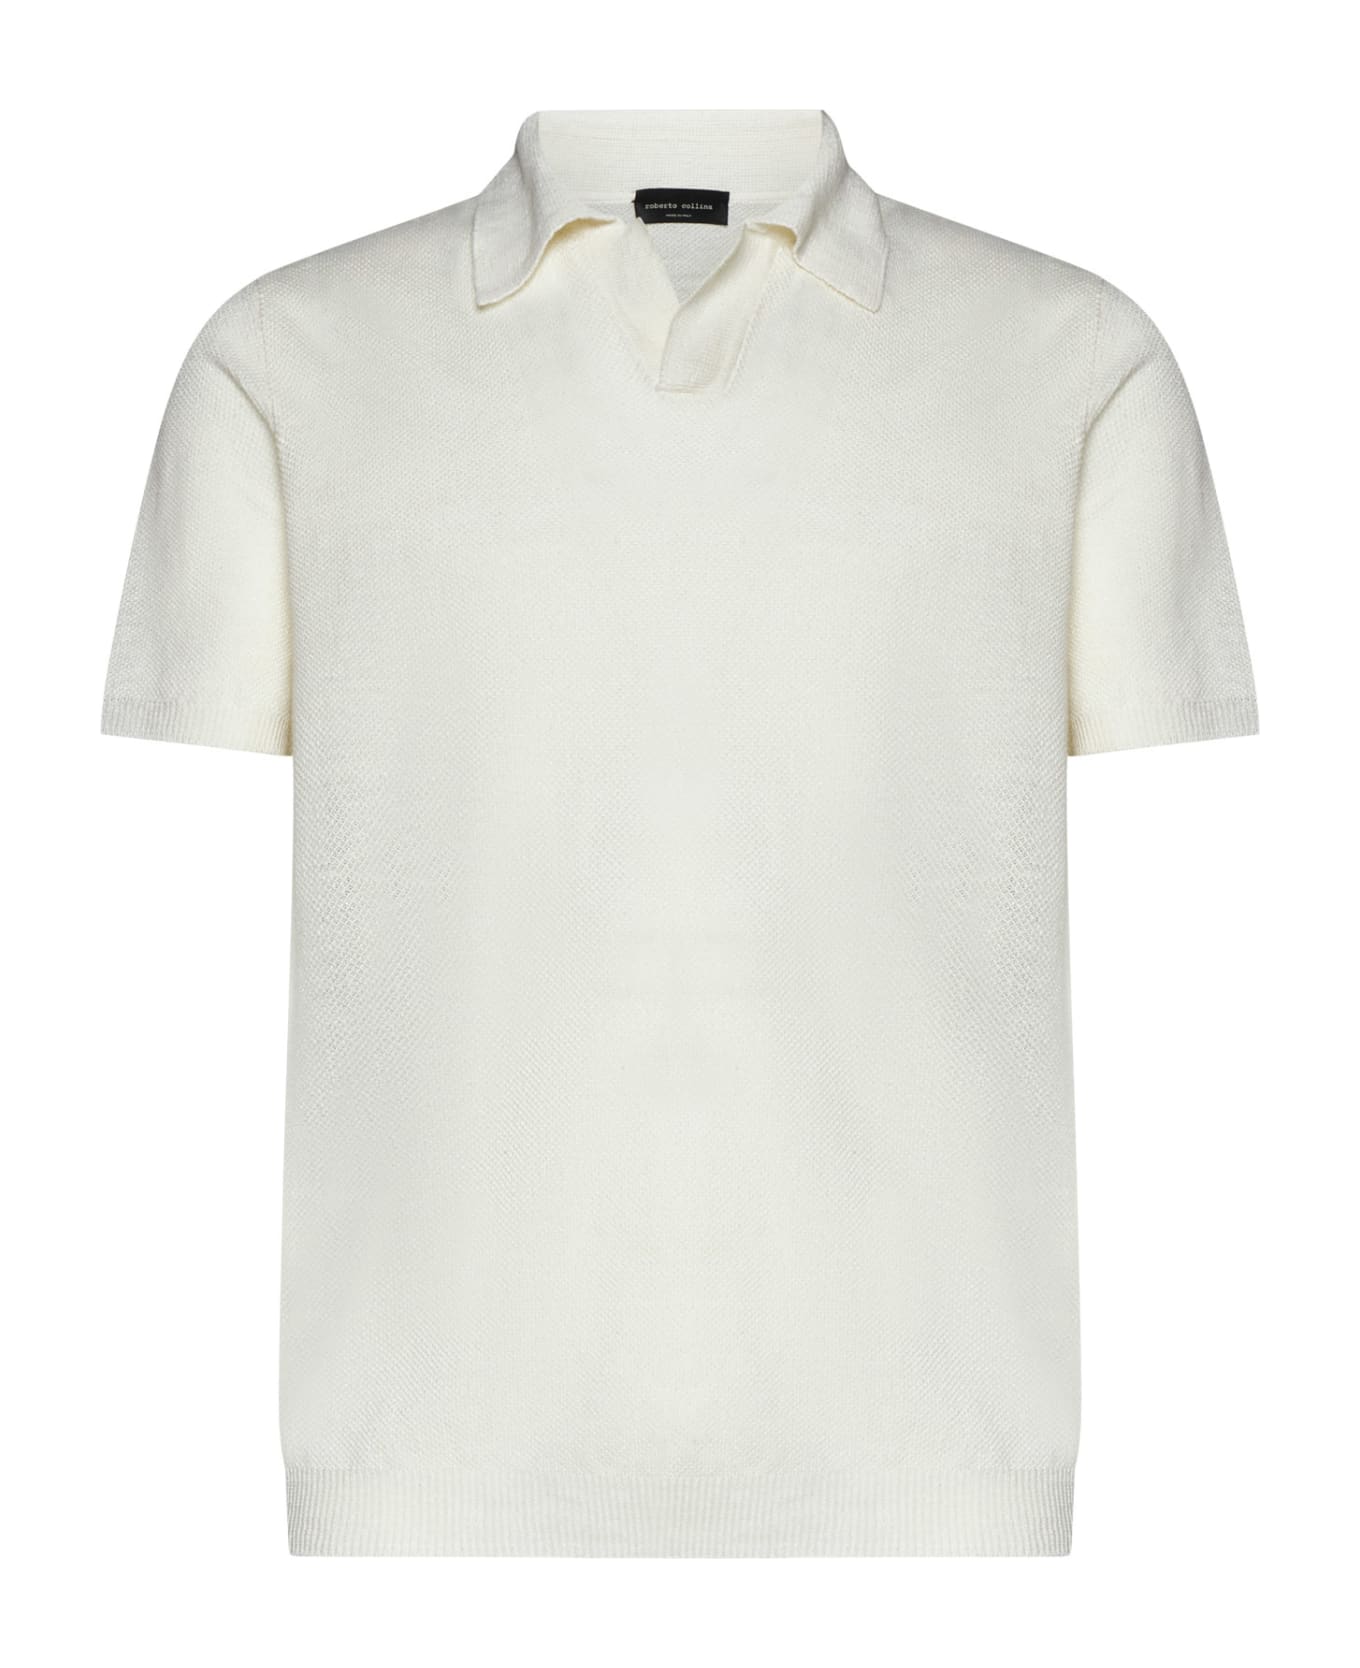 Roberto Collina Polo Shirt - White